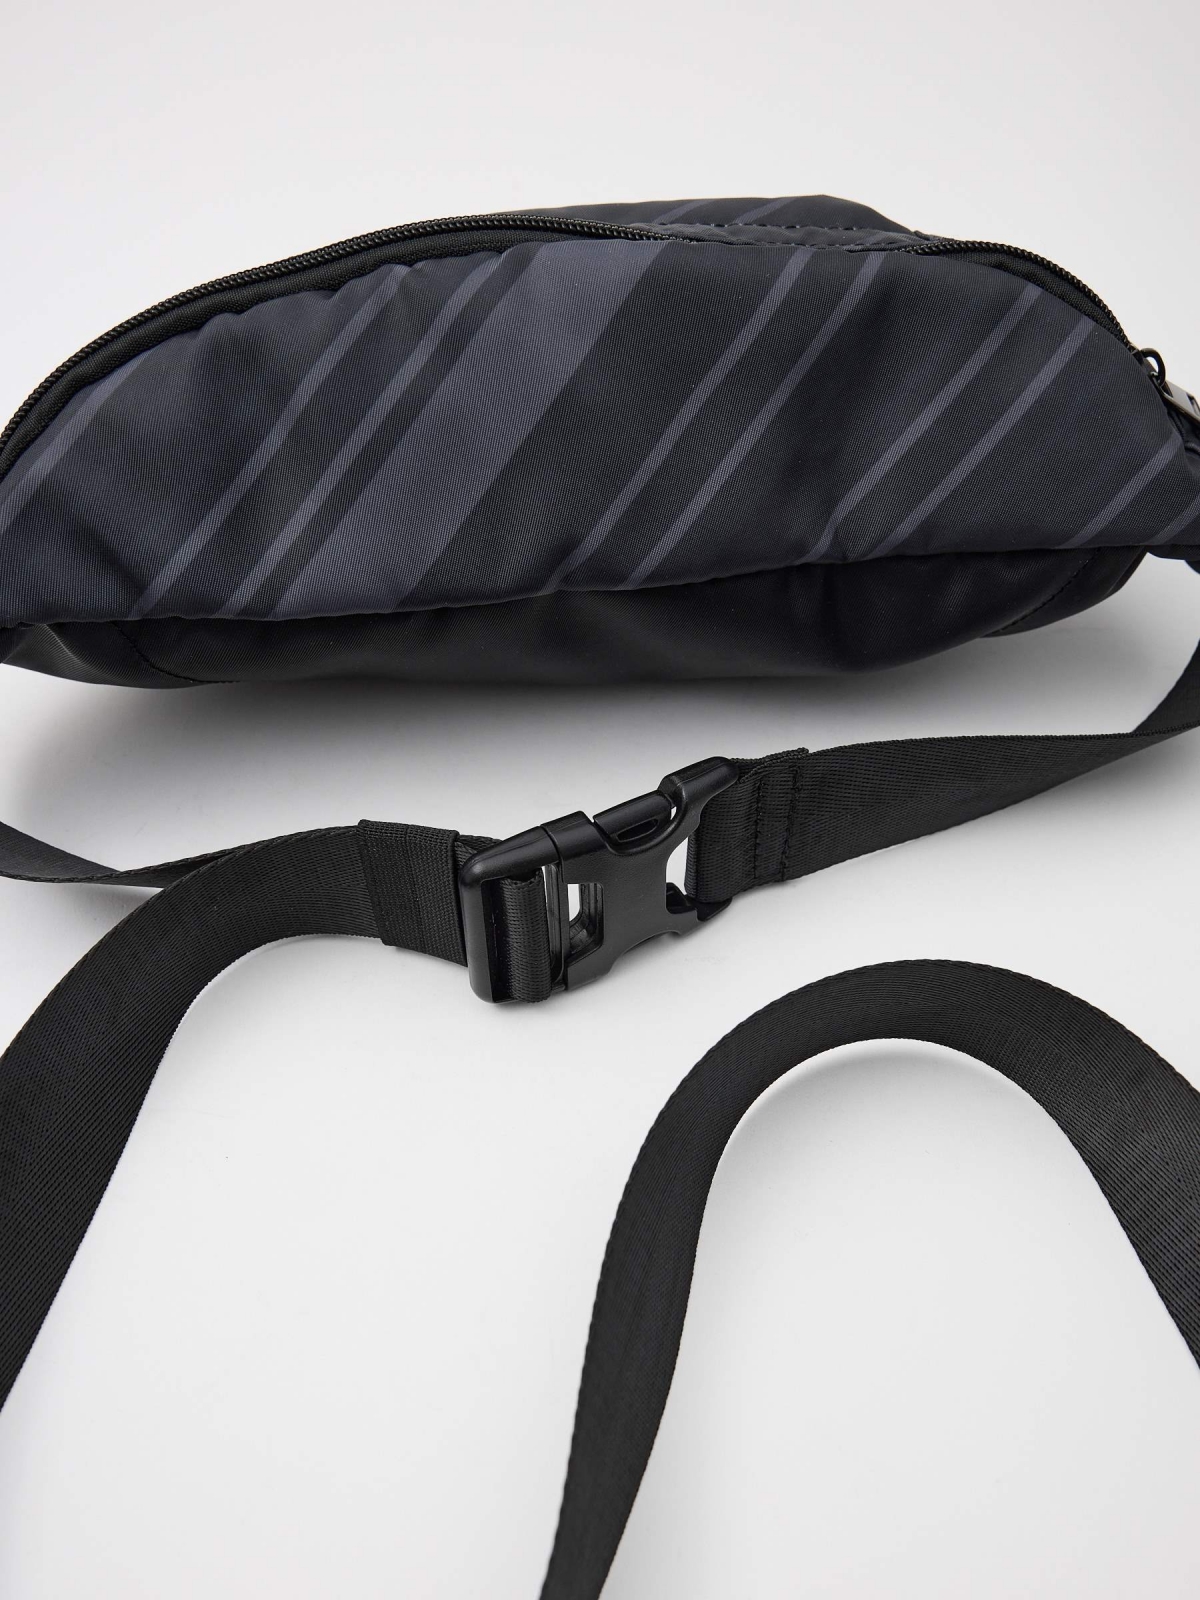 Men's fanny pack with black zipper detail view